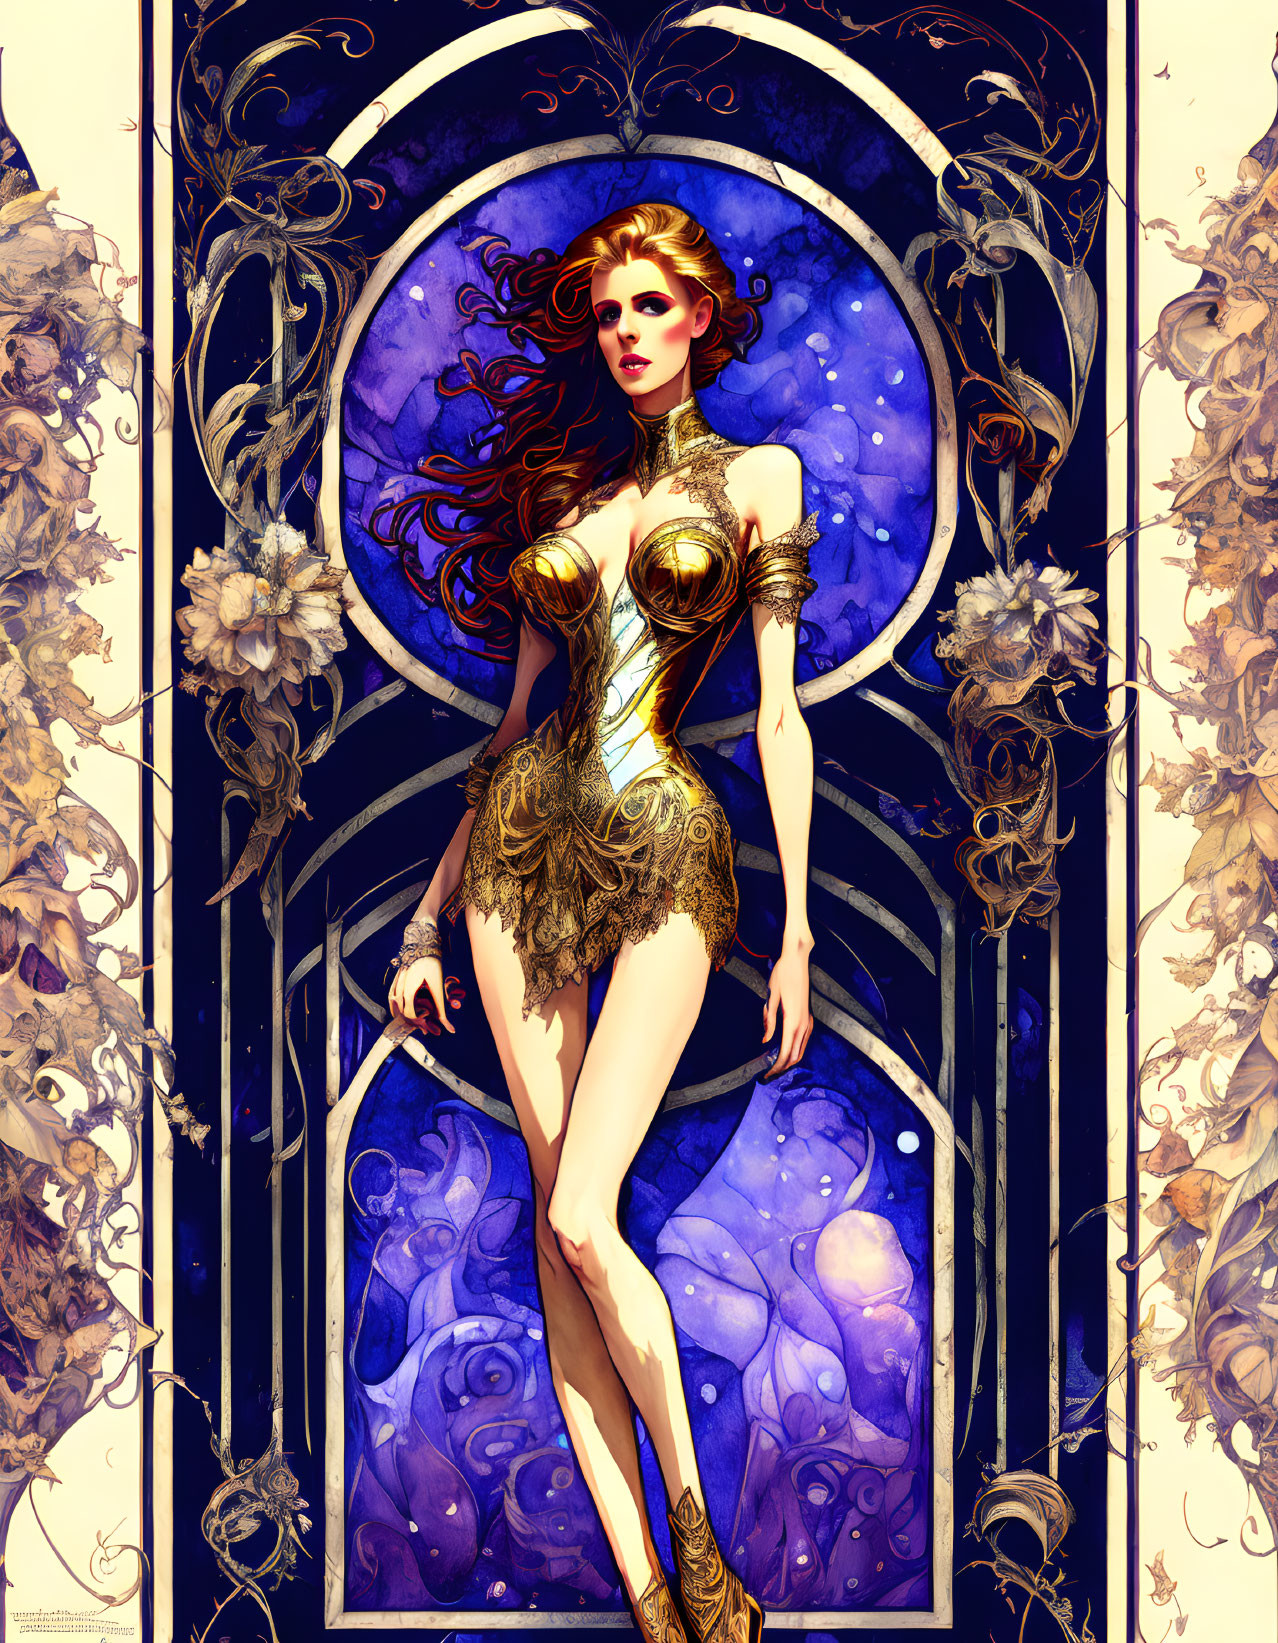 Fantasy female figure in golden armor with auburn hair in ornamental frame